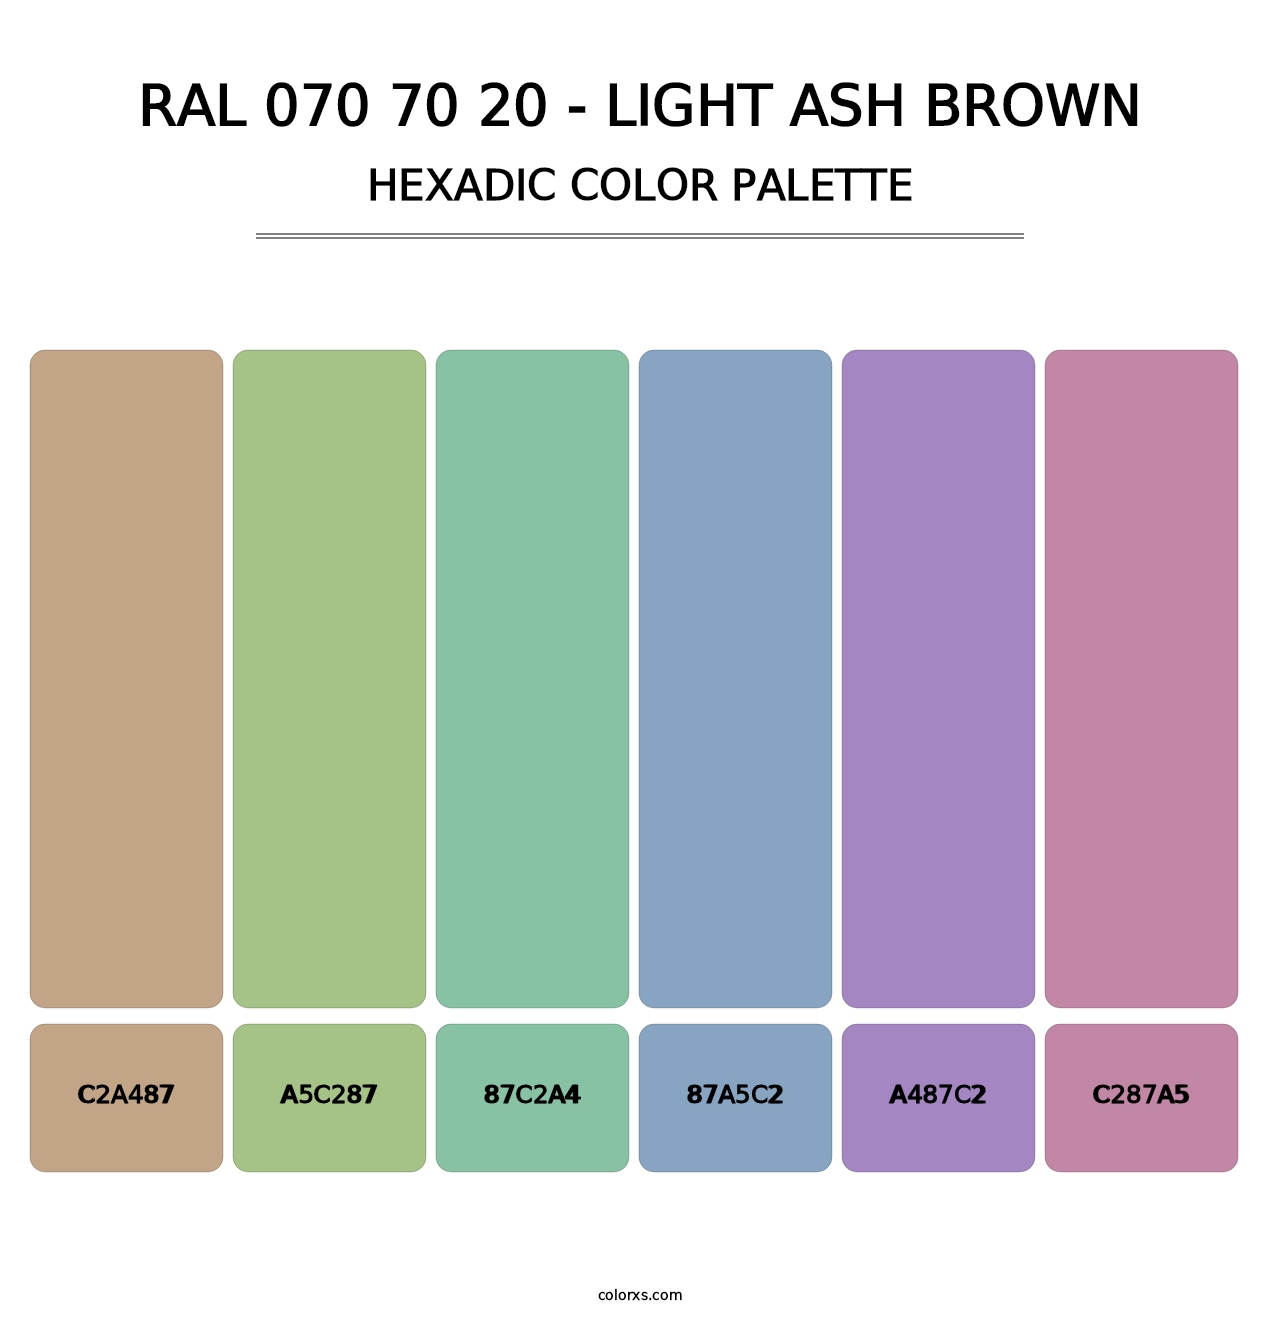 RAL 070 70 20 - Light Ash Brown - Hexadic Color Palette